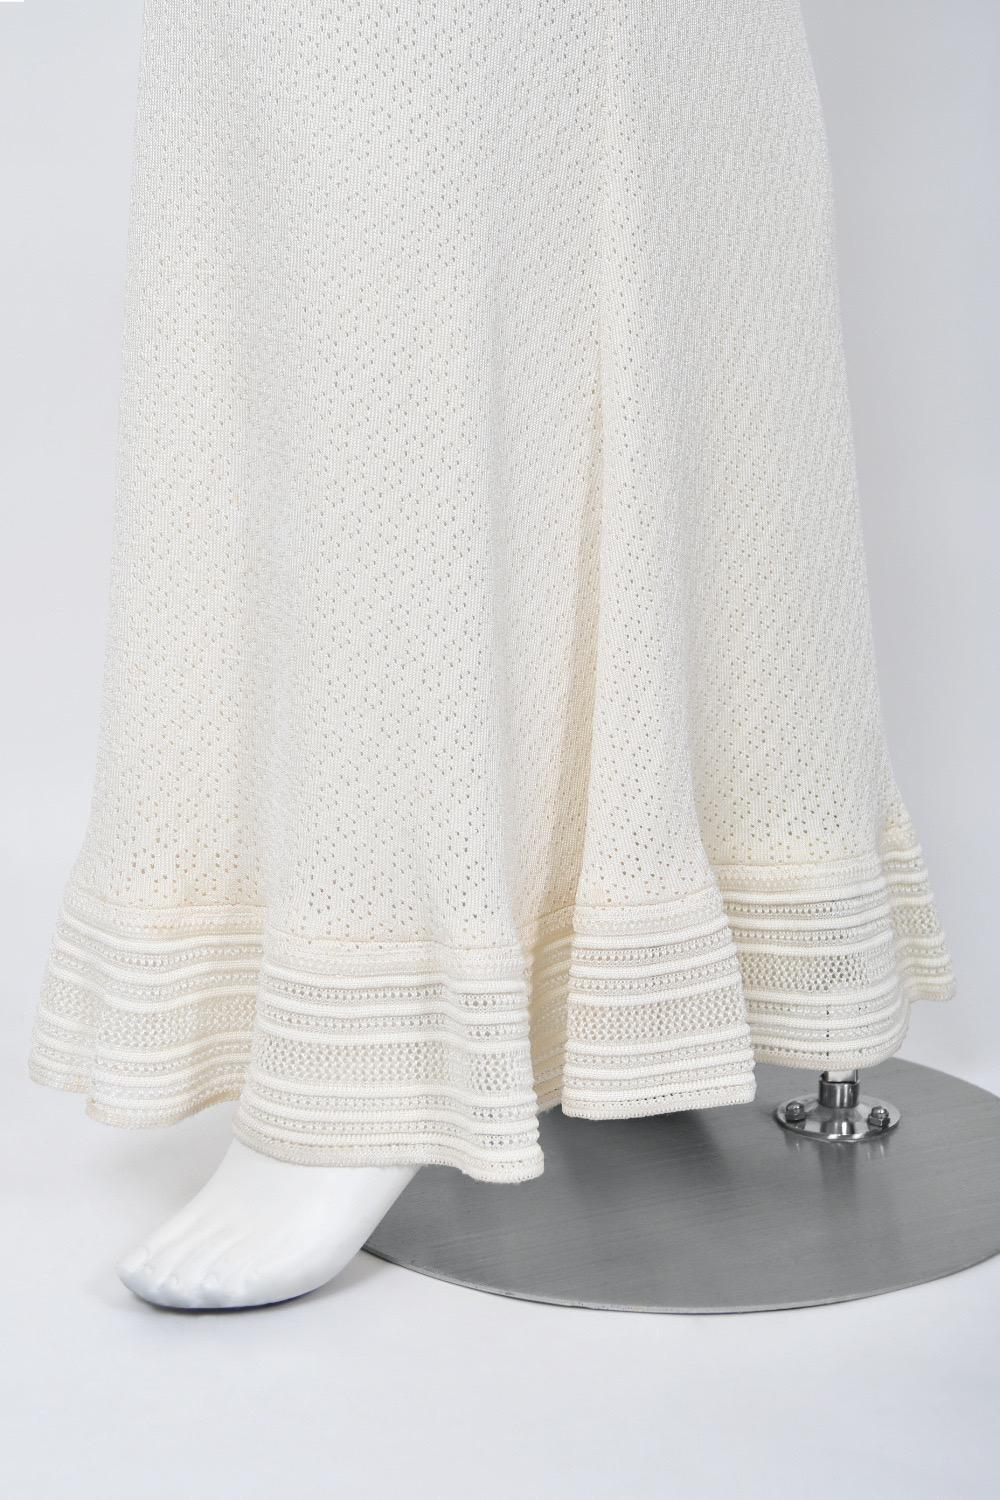 1998 John Galliano Runway Ivory Stretch Knit Sheer Bias-Cut Backless Bridal Gown 9